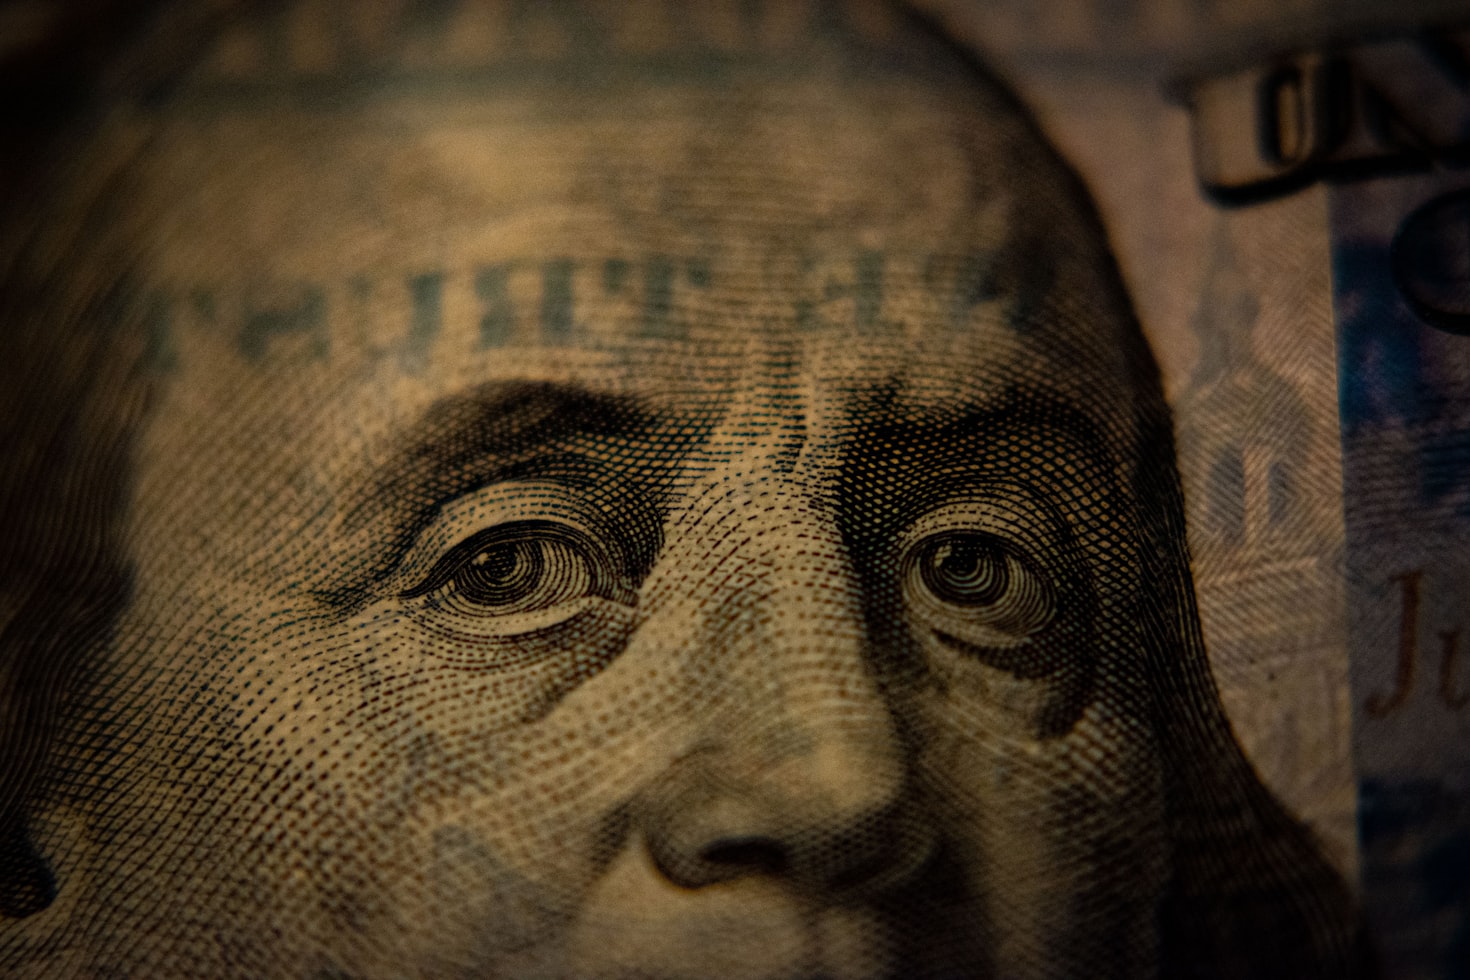 a close-up of a US hundred dollar bill featuring Benjamin Franklin